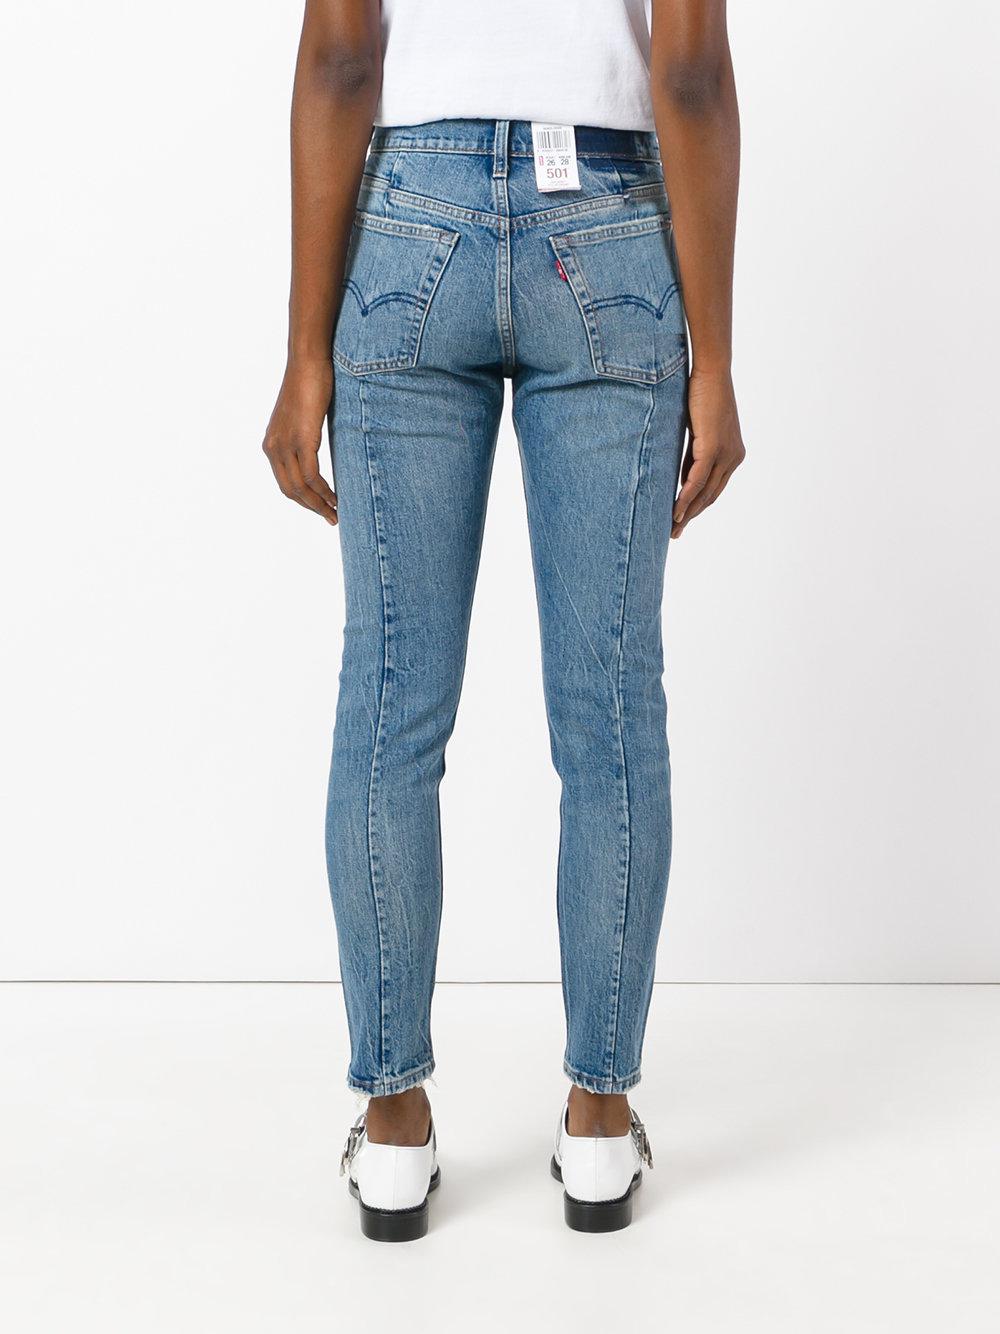 levi's 501 altered skinny jeans